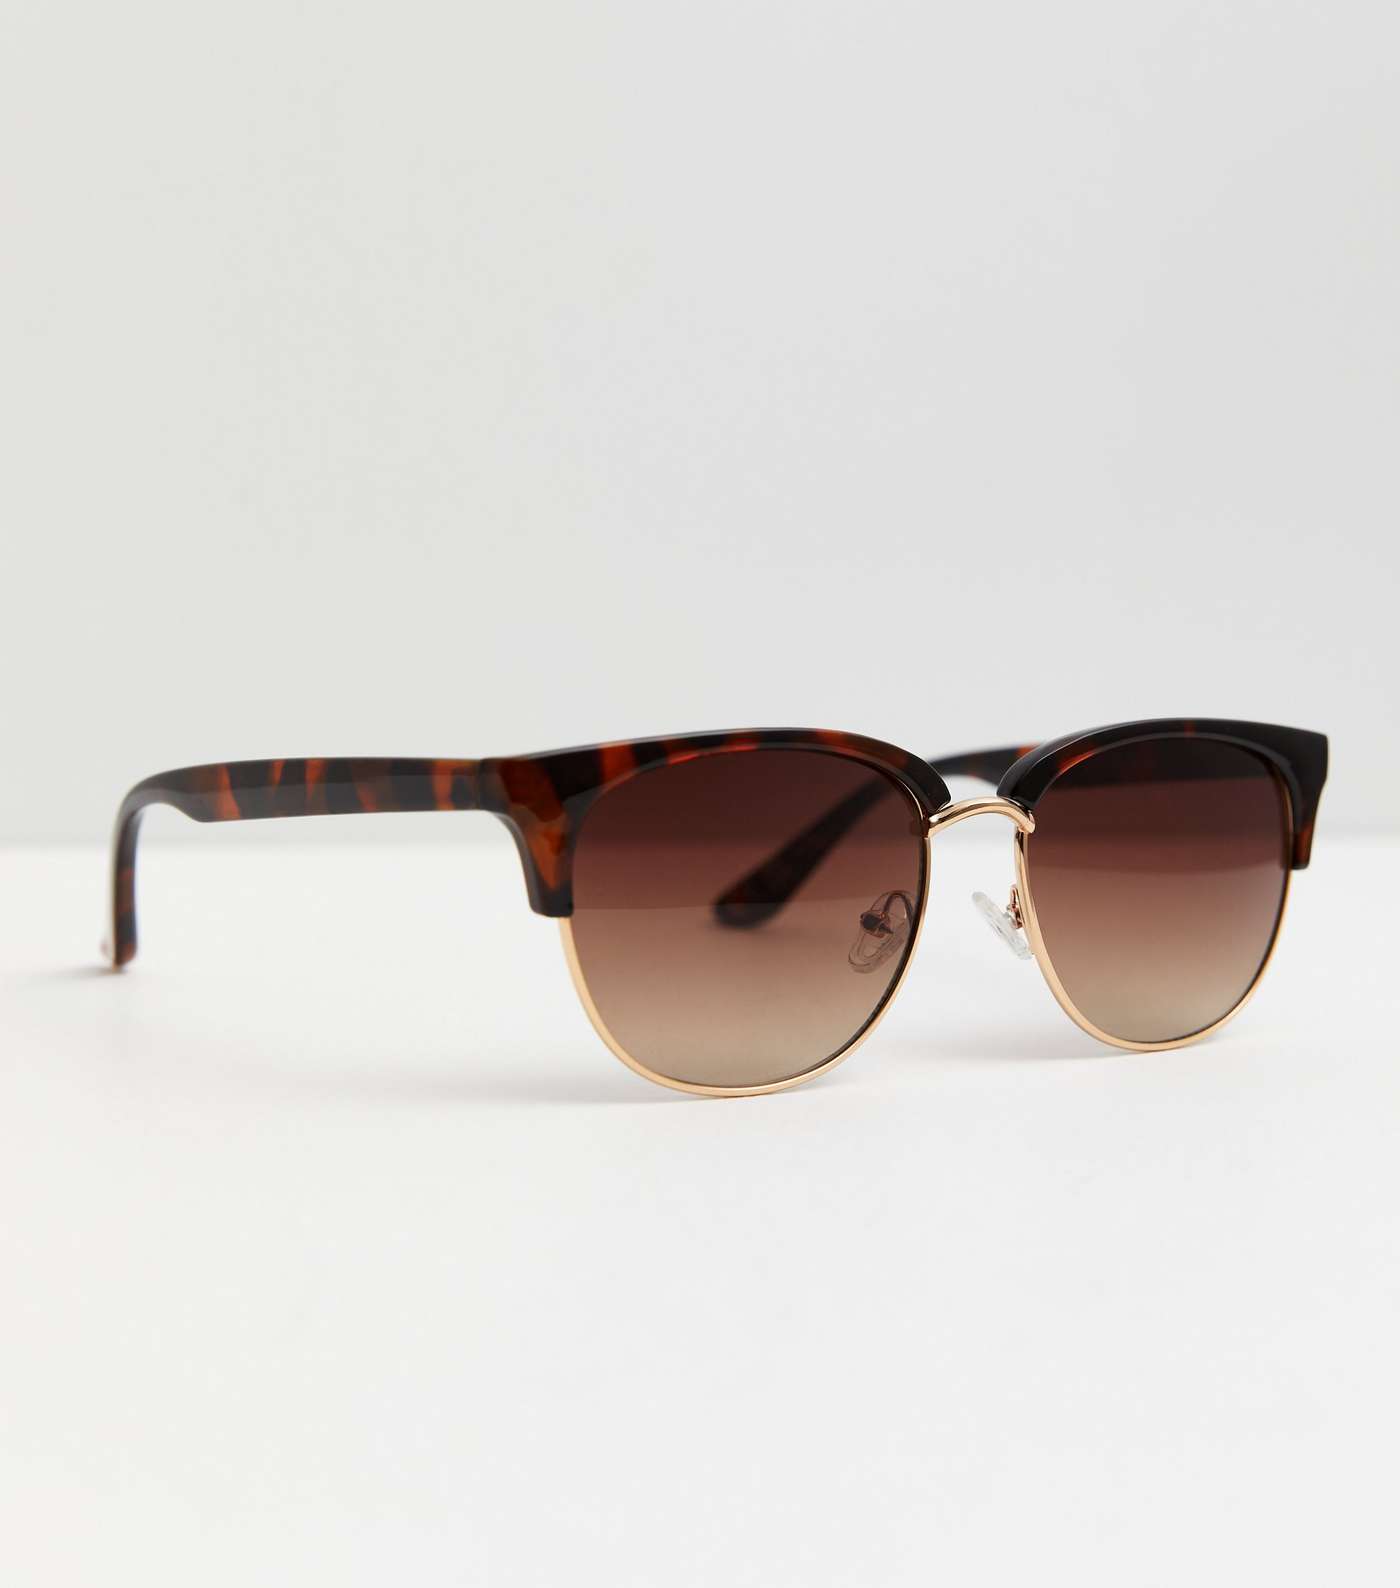 2 Pack Black and Tortoiseshell Effect Square Sunglasses Image 2